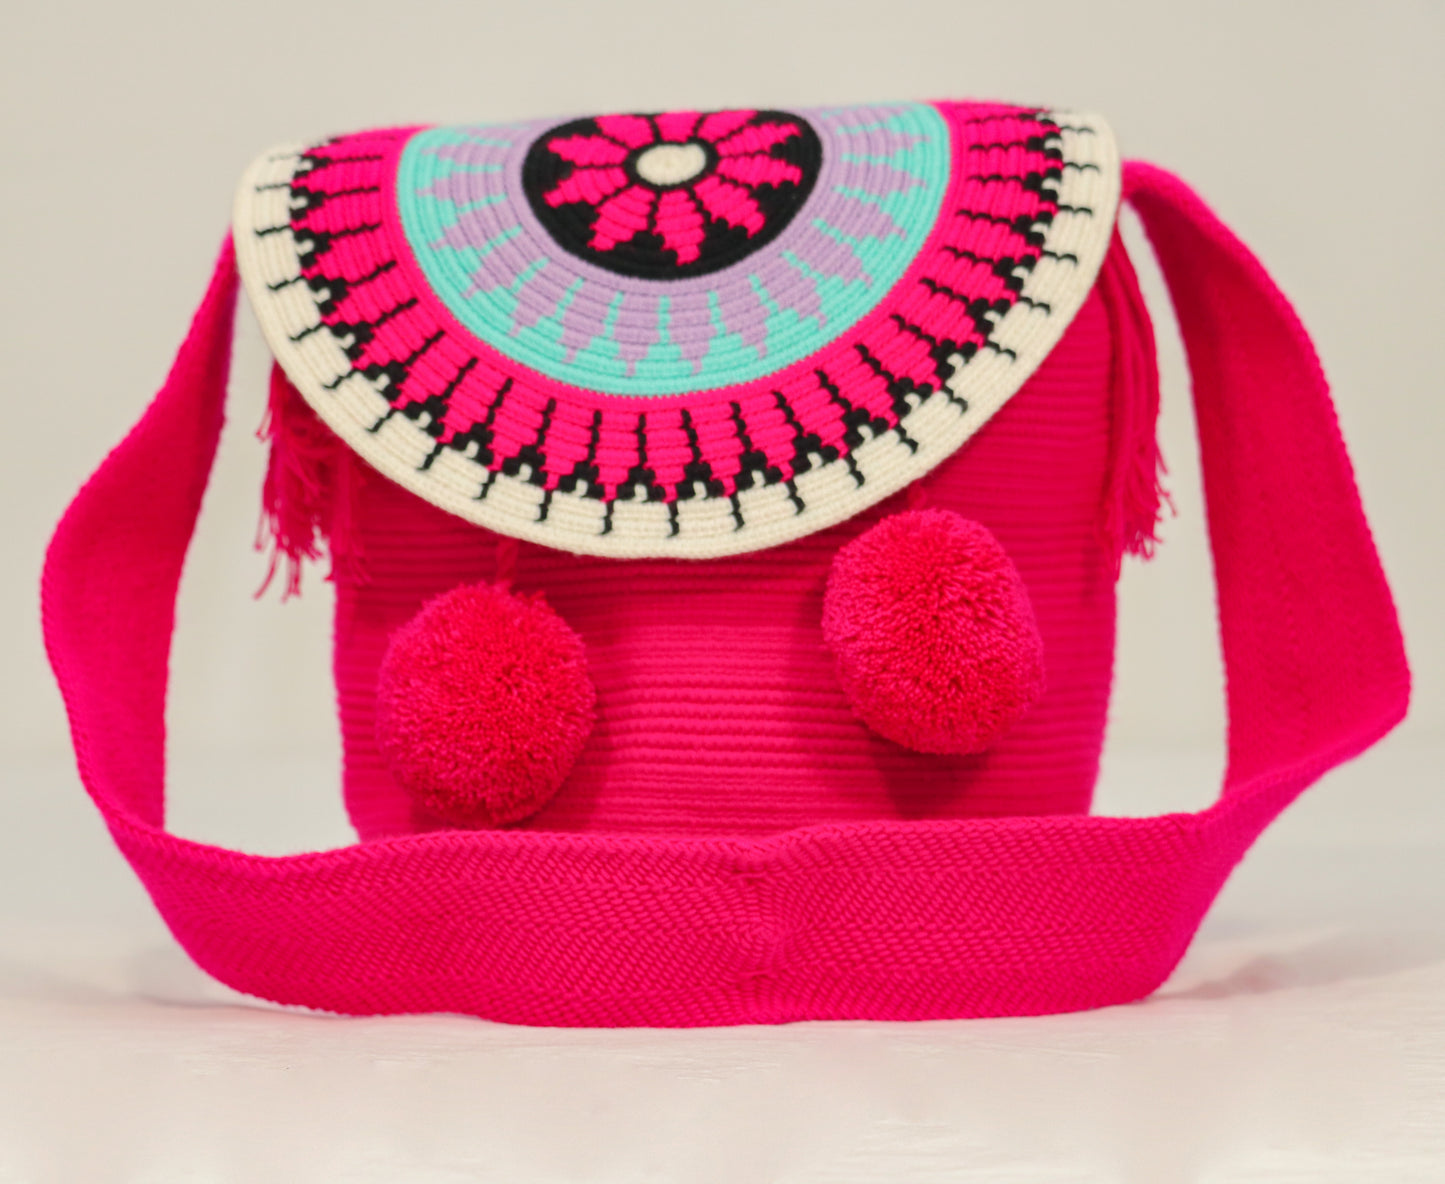 Handbag / Backpack / Mochila with lid and tassels